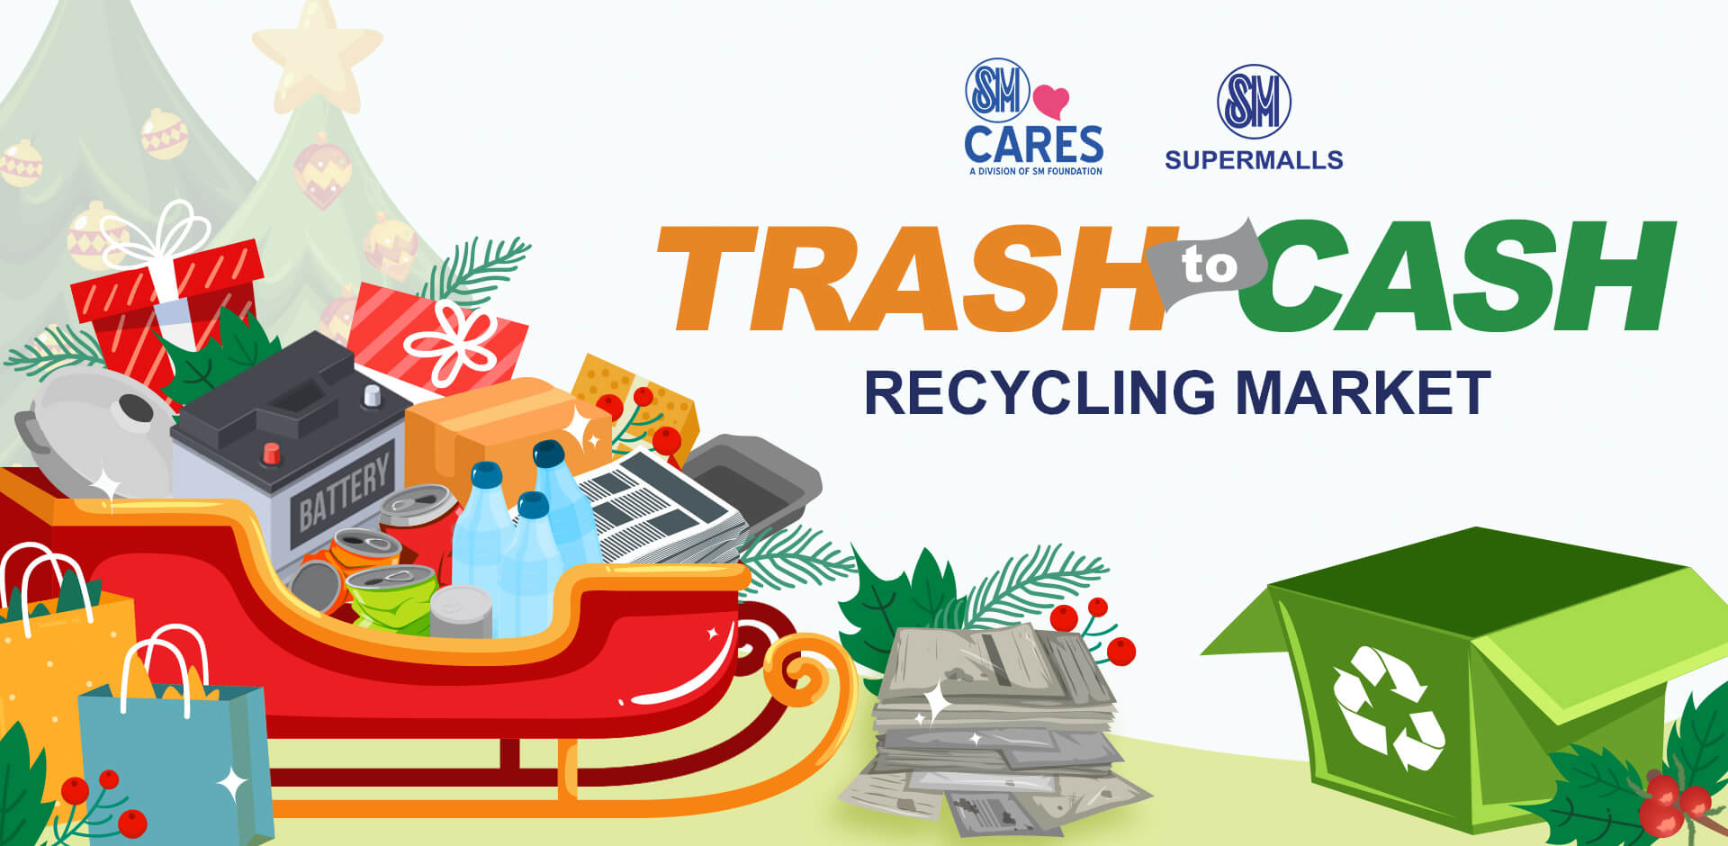 a-mindful-christmas-celebration-via-sms-trash-to-cash-recycling-market